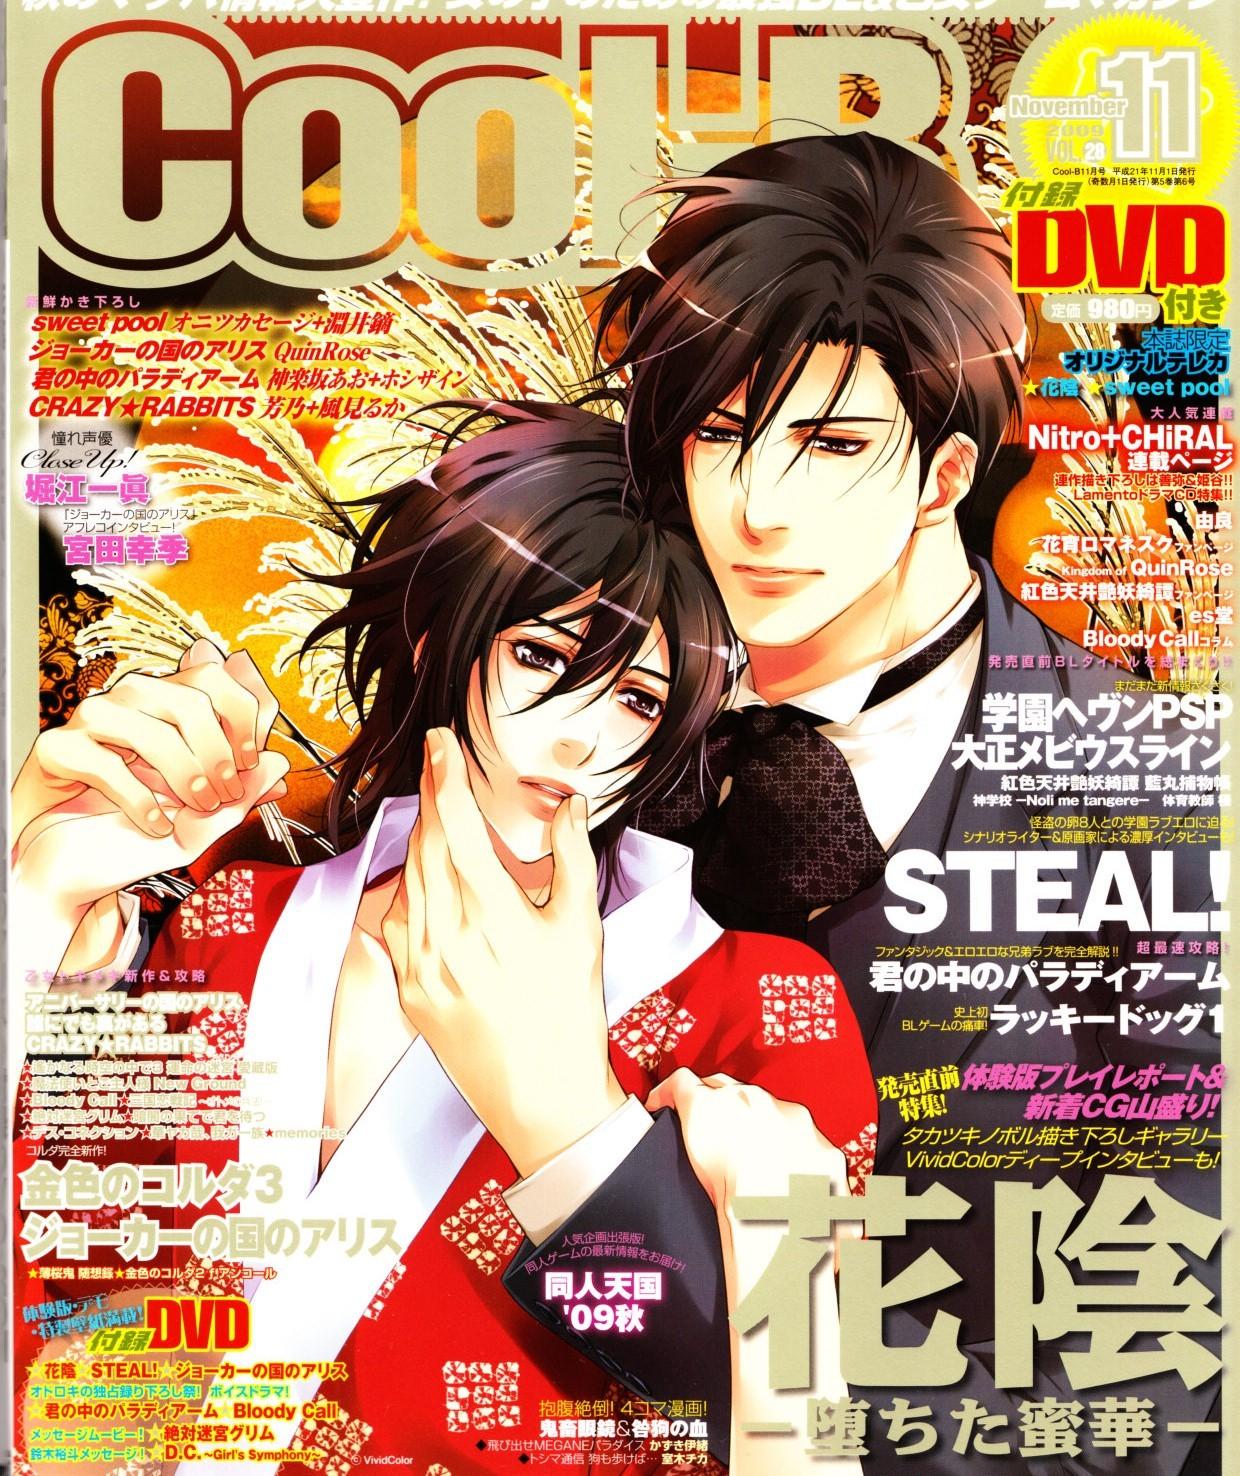 Cool-B Vol.28 2009-11 0